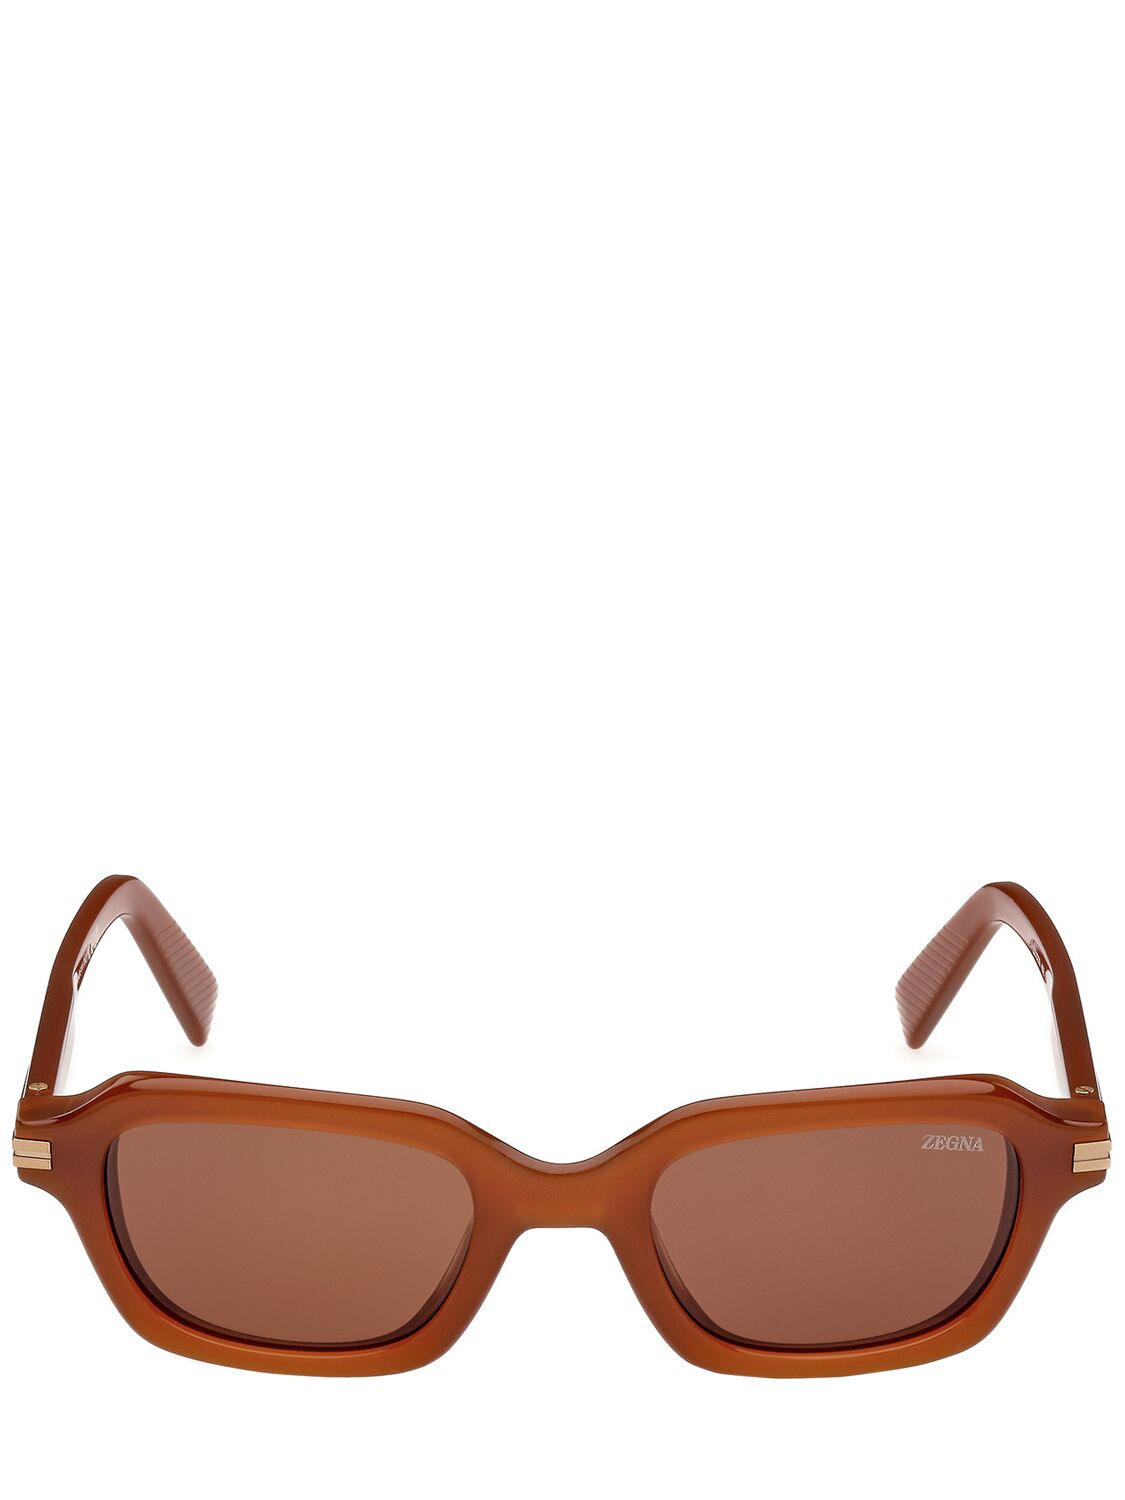 Zegna Squared Sunglasses In Brown